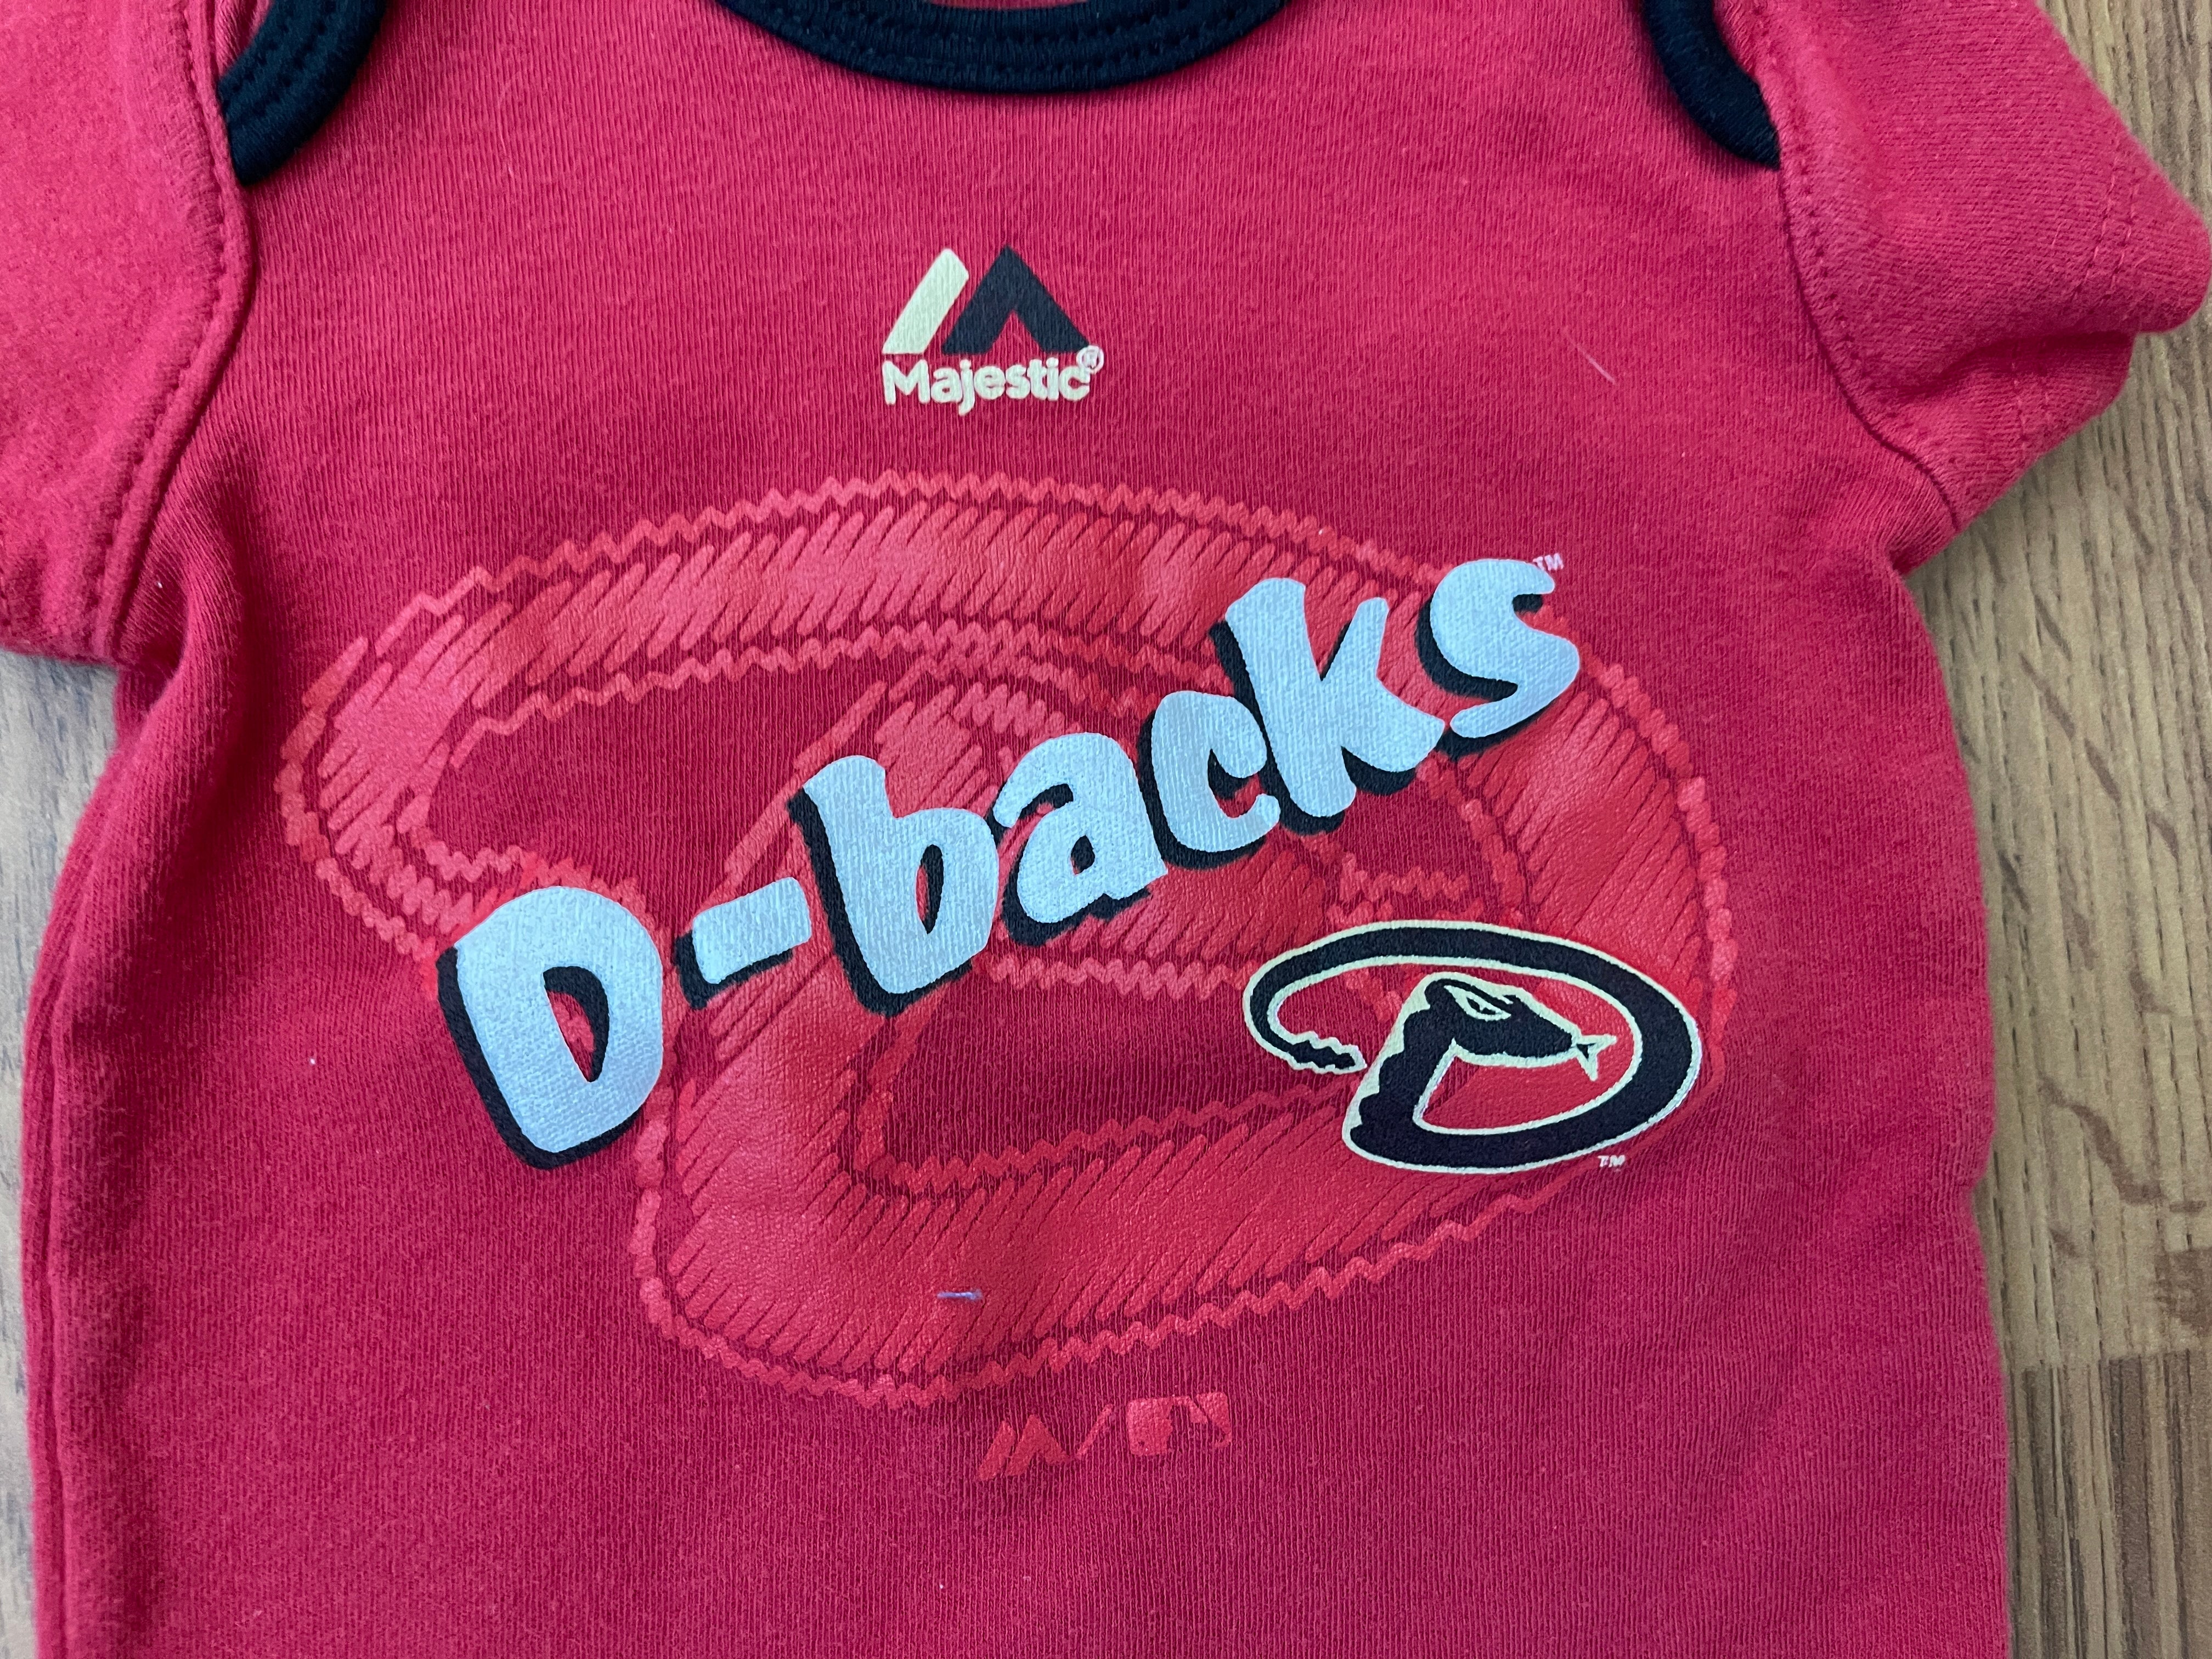 Arizona Diamondbacks Dbacks MLB BASEBALL Boys Infant Size 0-3M